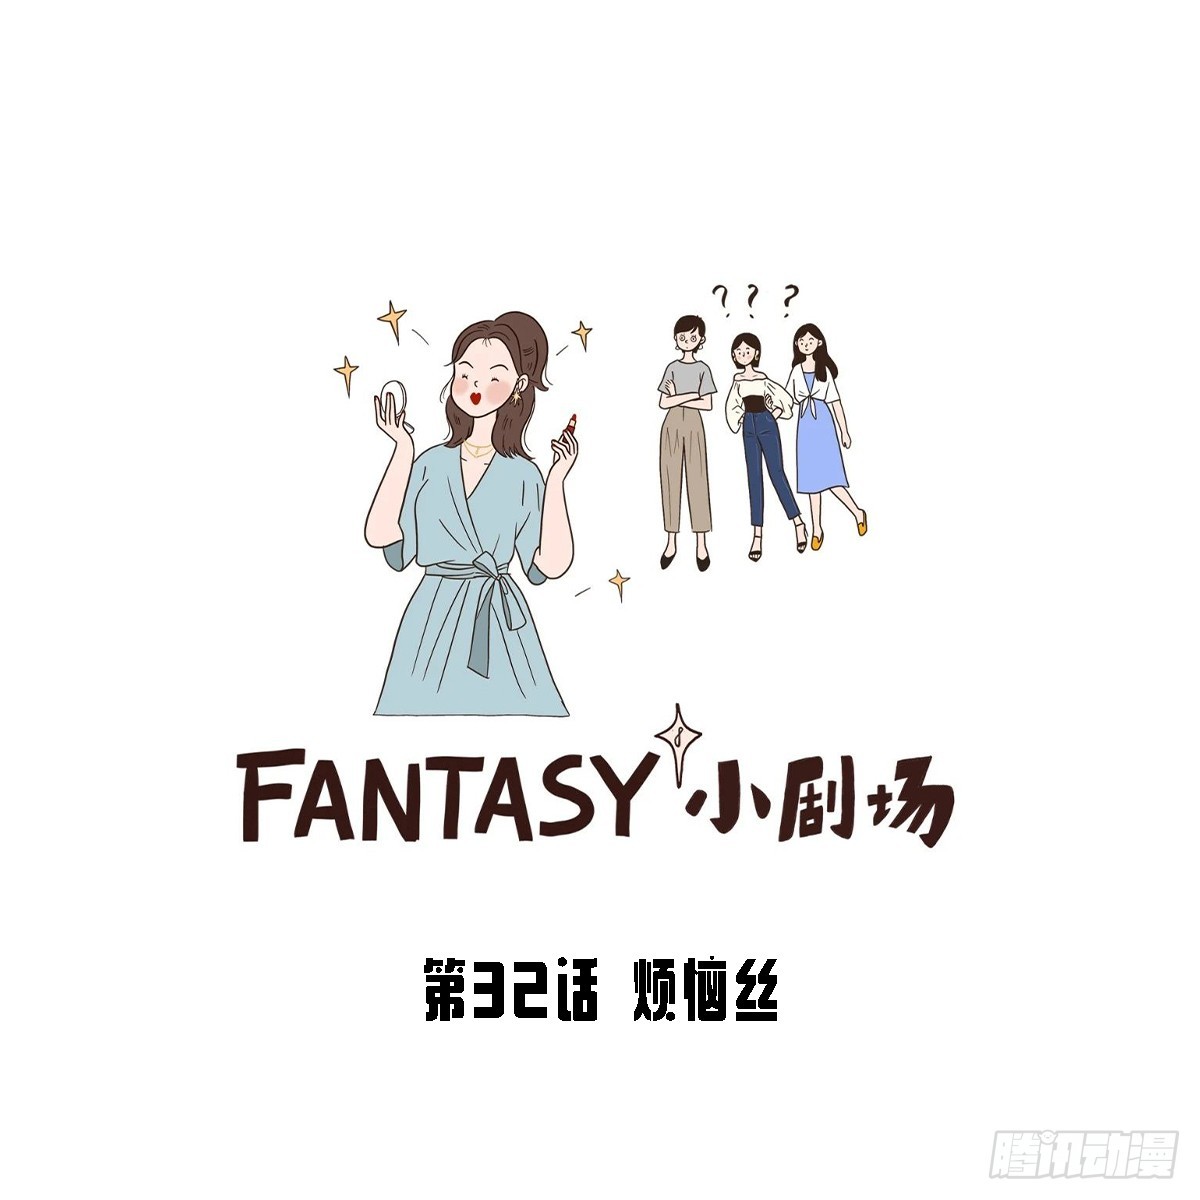 Fantasy小剧场 - 烦恼丝 - 1